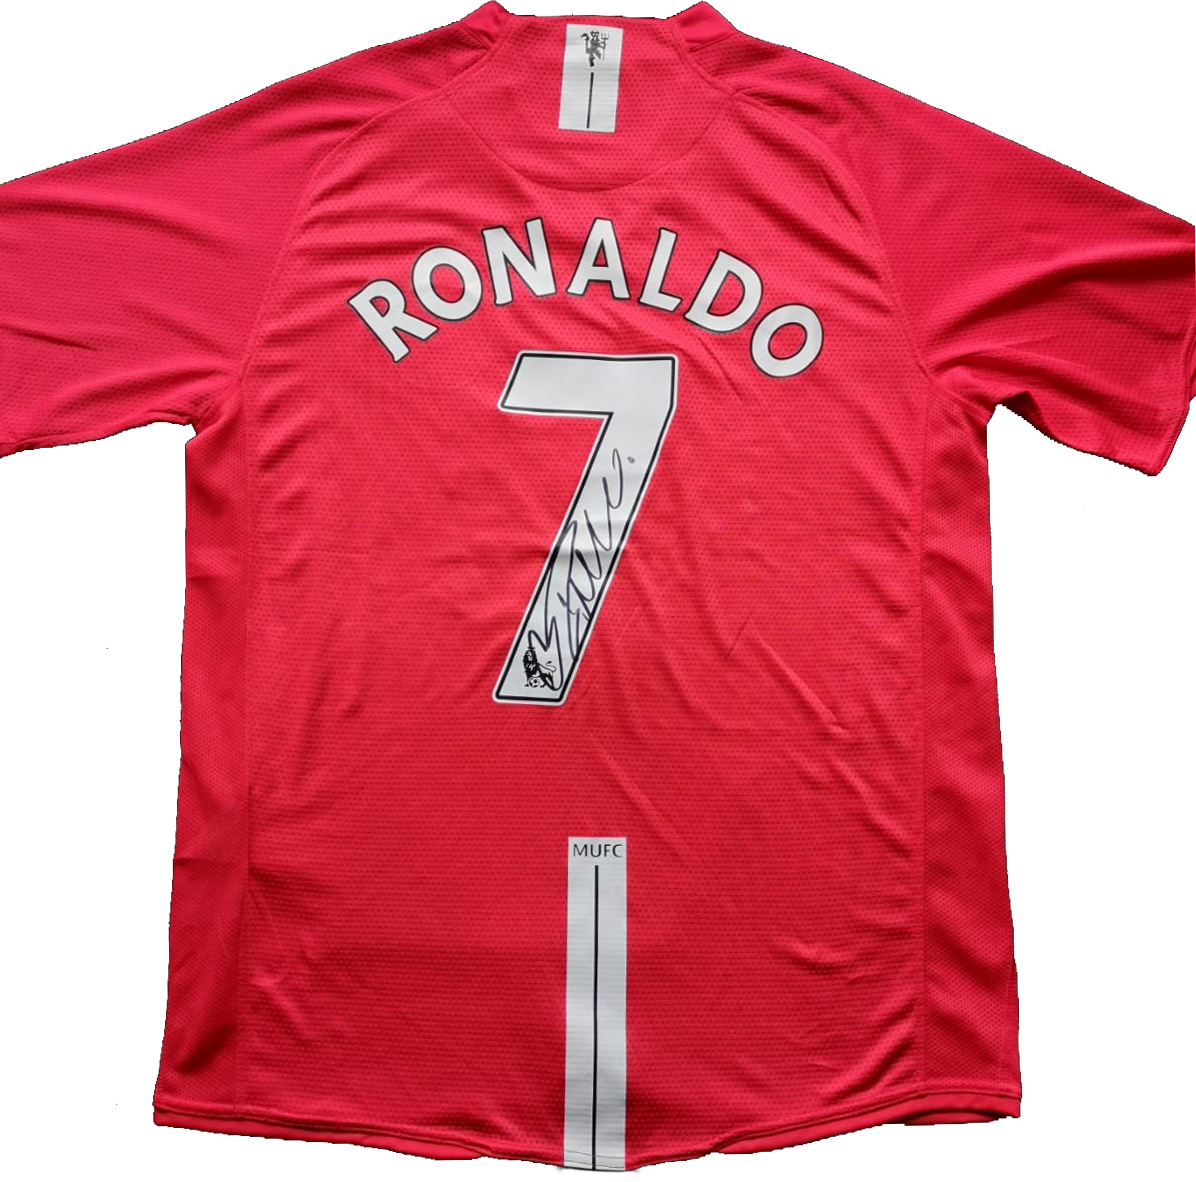 ronaldo signed shirt price